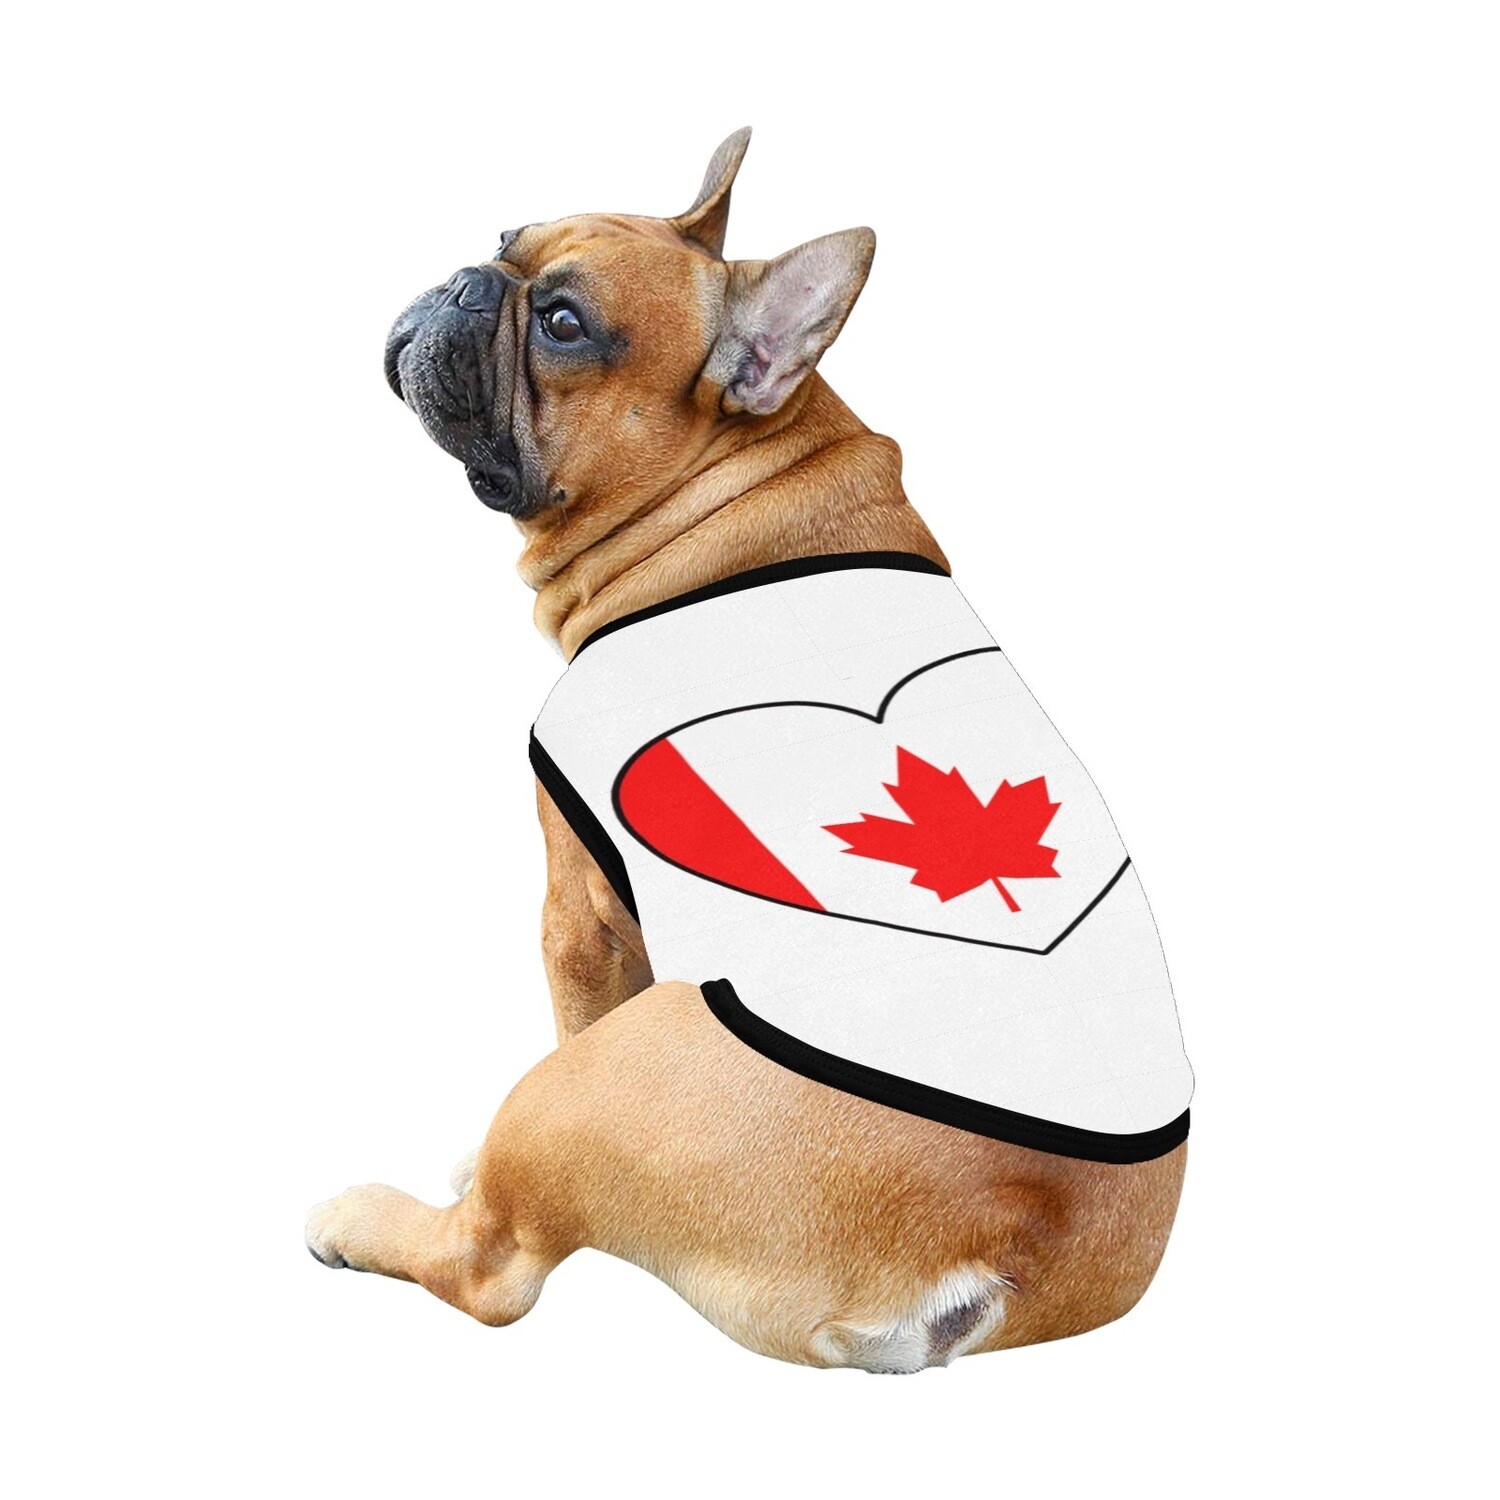 🐕 🇨🇦 I love Canada dog t-shirt, dog gift, dog tank top, dog shirt, dog clothes, gift, 7 sizes XS to 3XL, Canadian flag, Canadian, heart, white